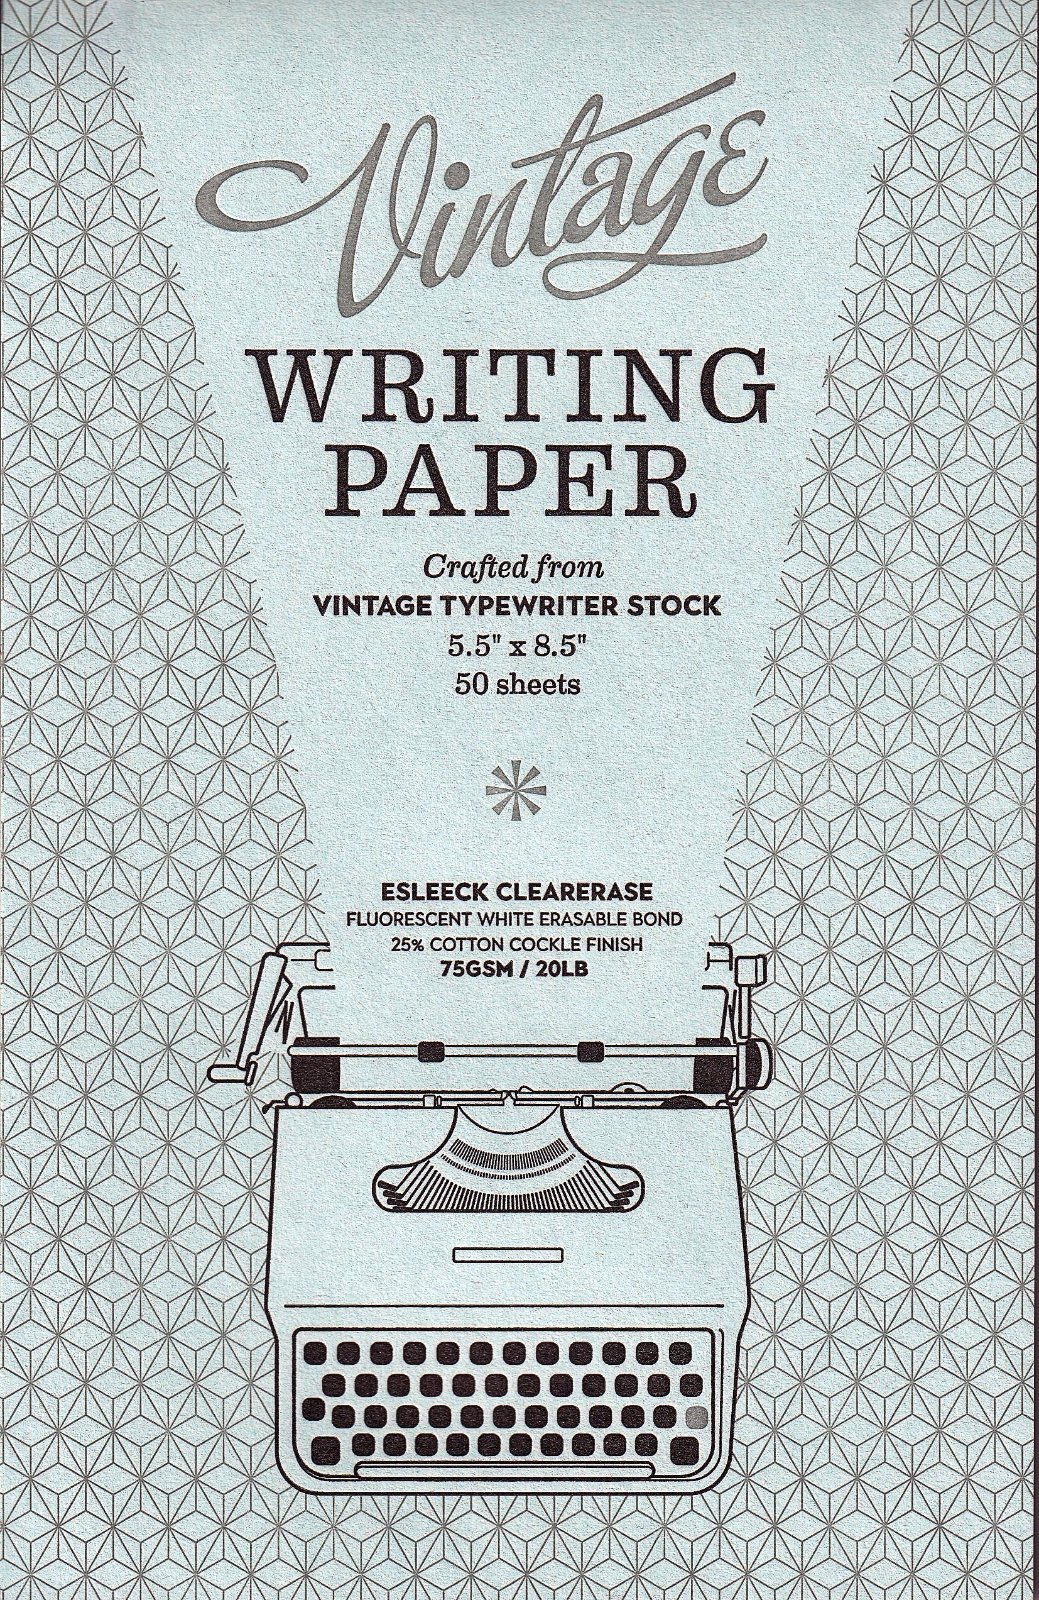 Stationery Sampler Kit Vintage Watermark Bond Typing Paper Southworth  Sheets for Typewriter 25 Sheets of Typewriter Paper 